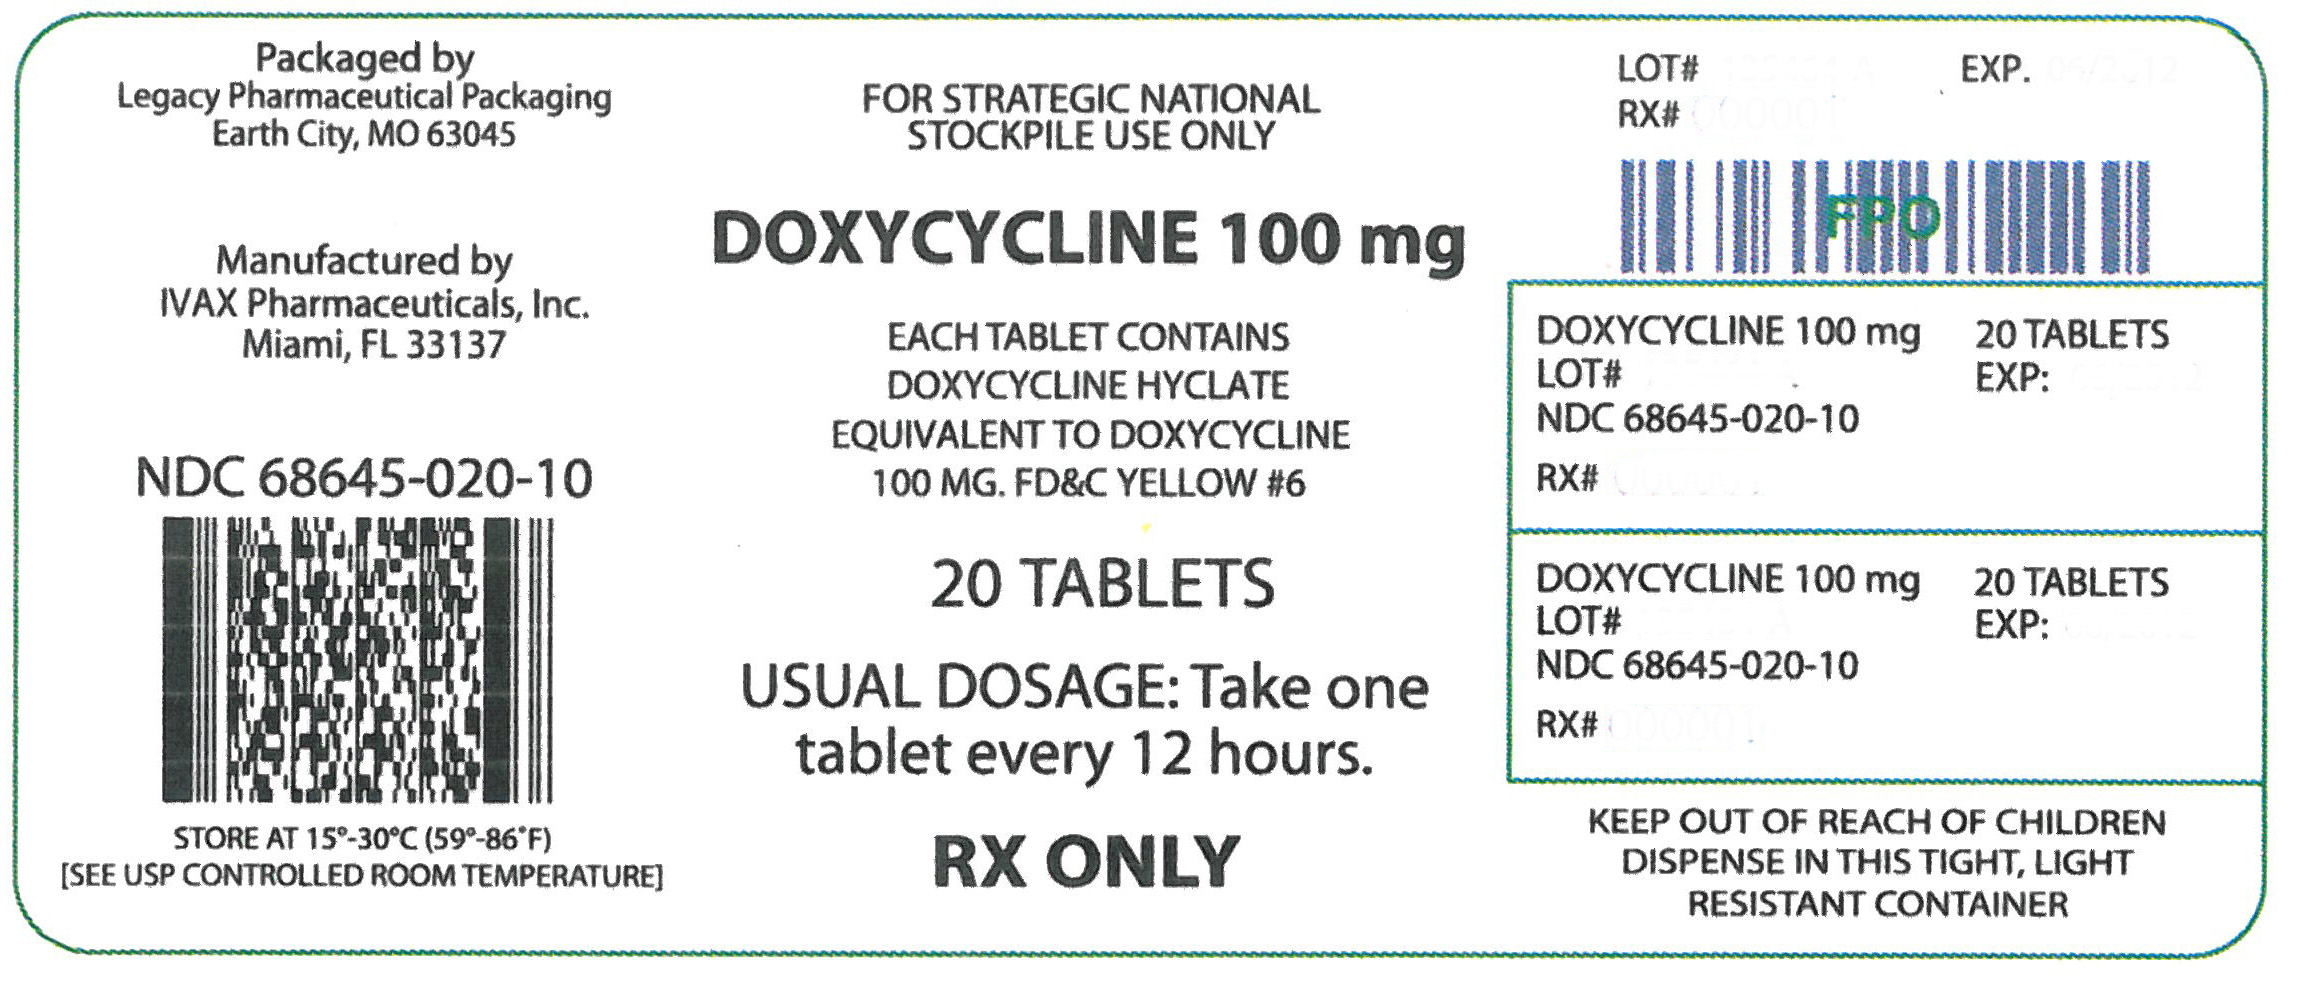 NDC: <a href=/NDC/68645-020-10>68645-020-10</a>

Doxycycline 100mg

Rx Only

20 tablets

